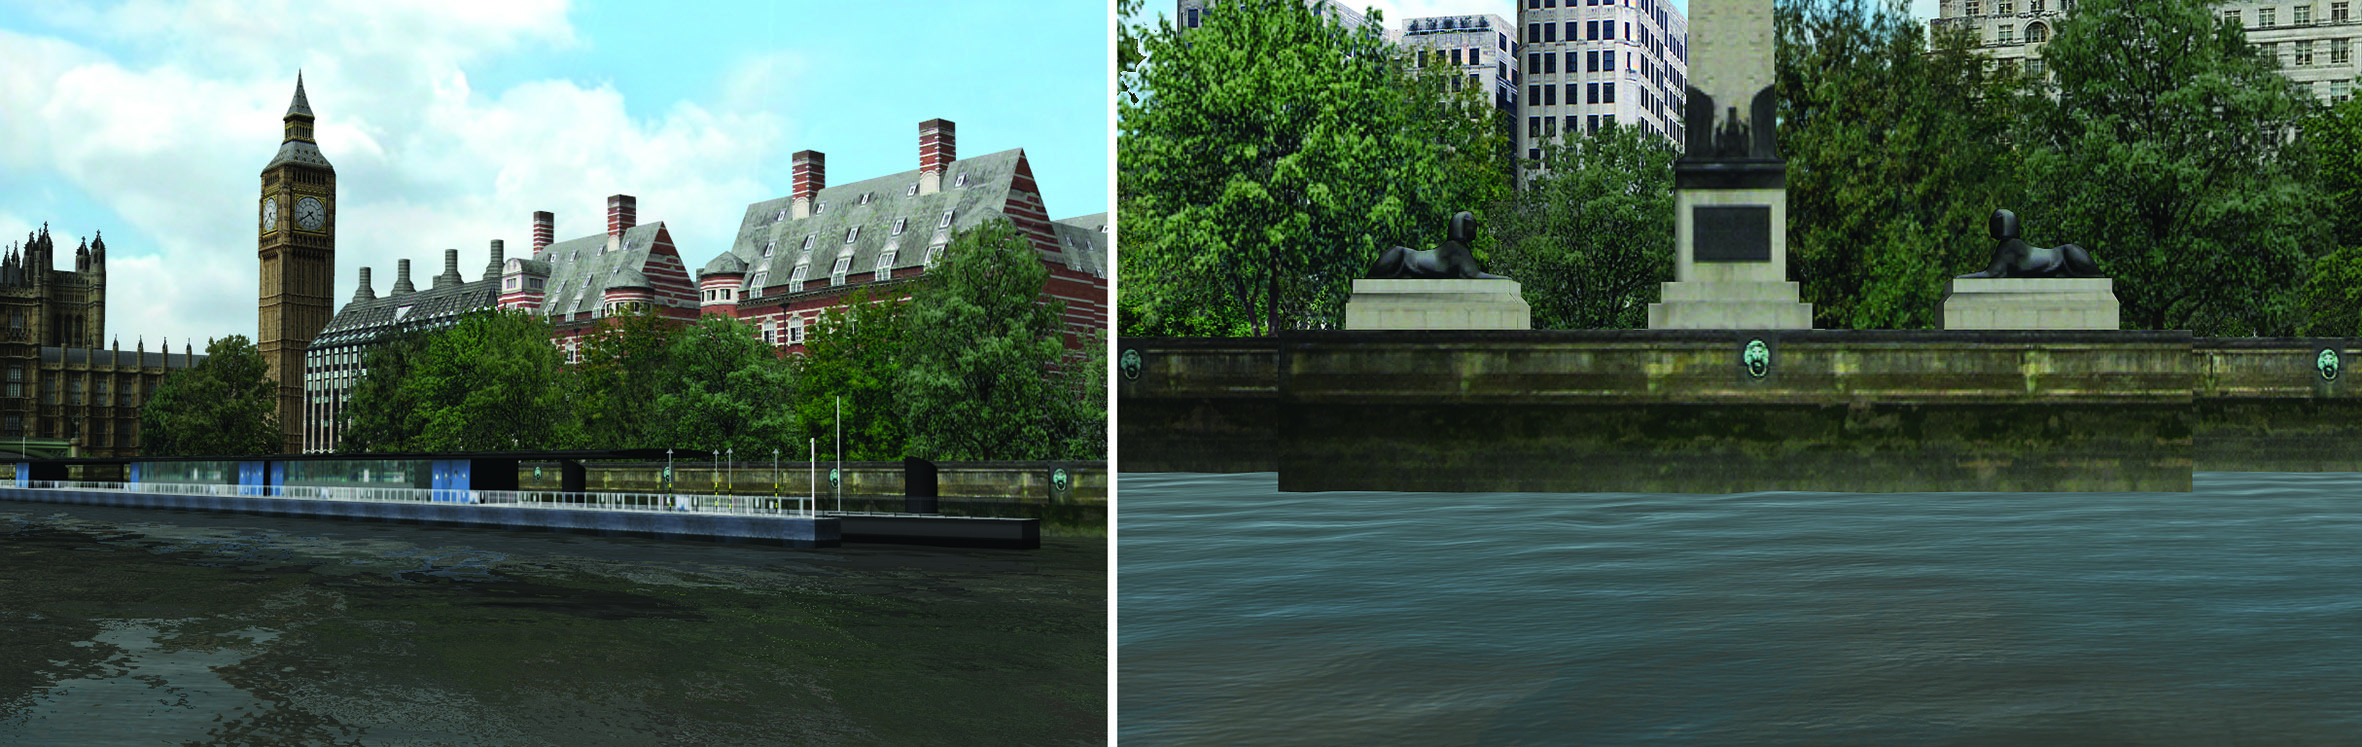 Embankment detail in HR Wallingfords River Thames Navigation Simulation Composite